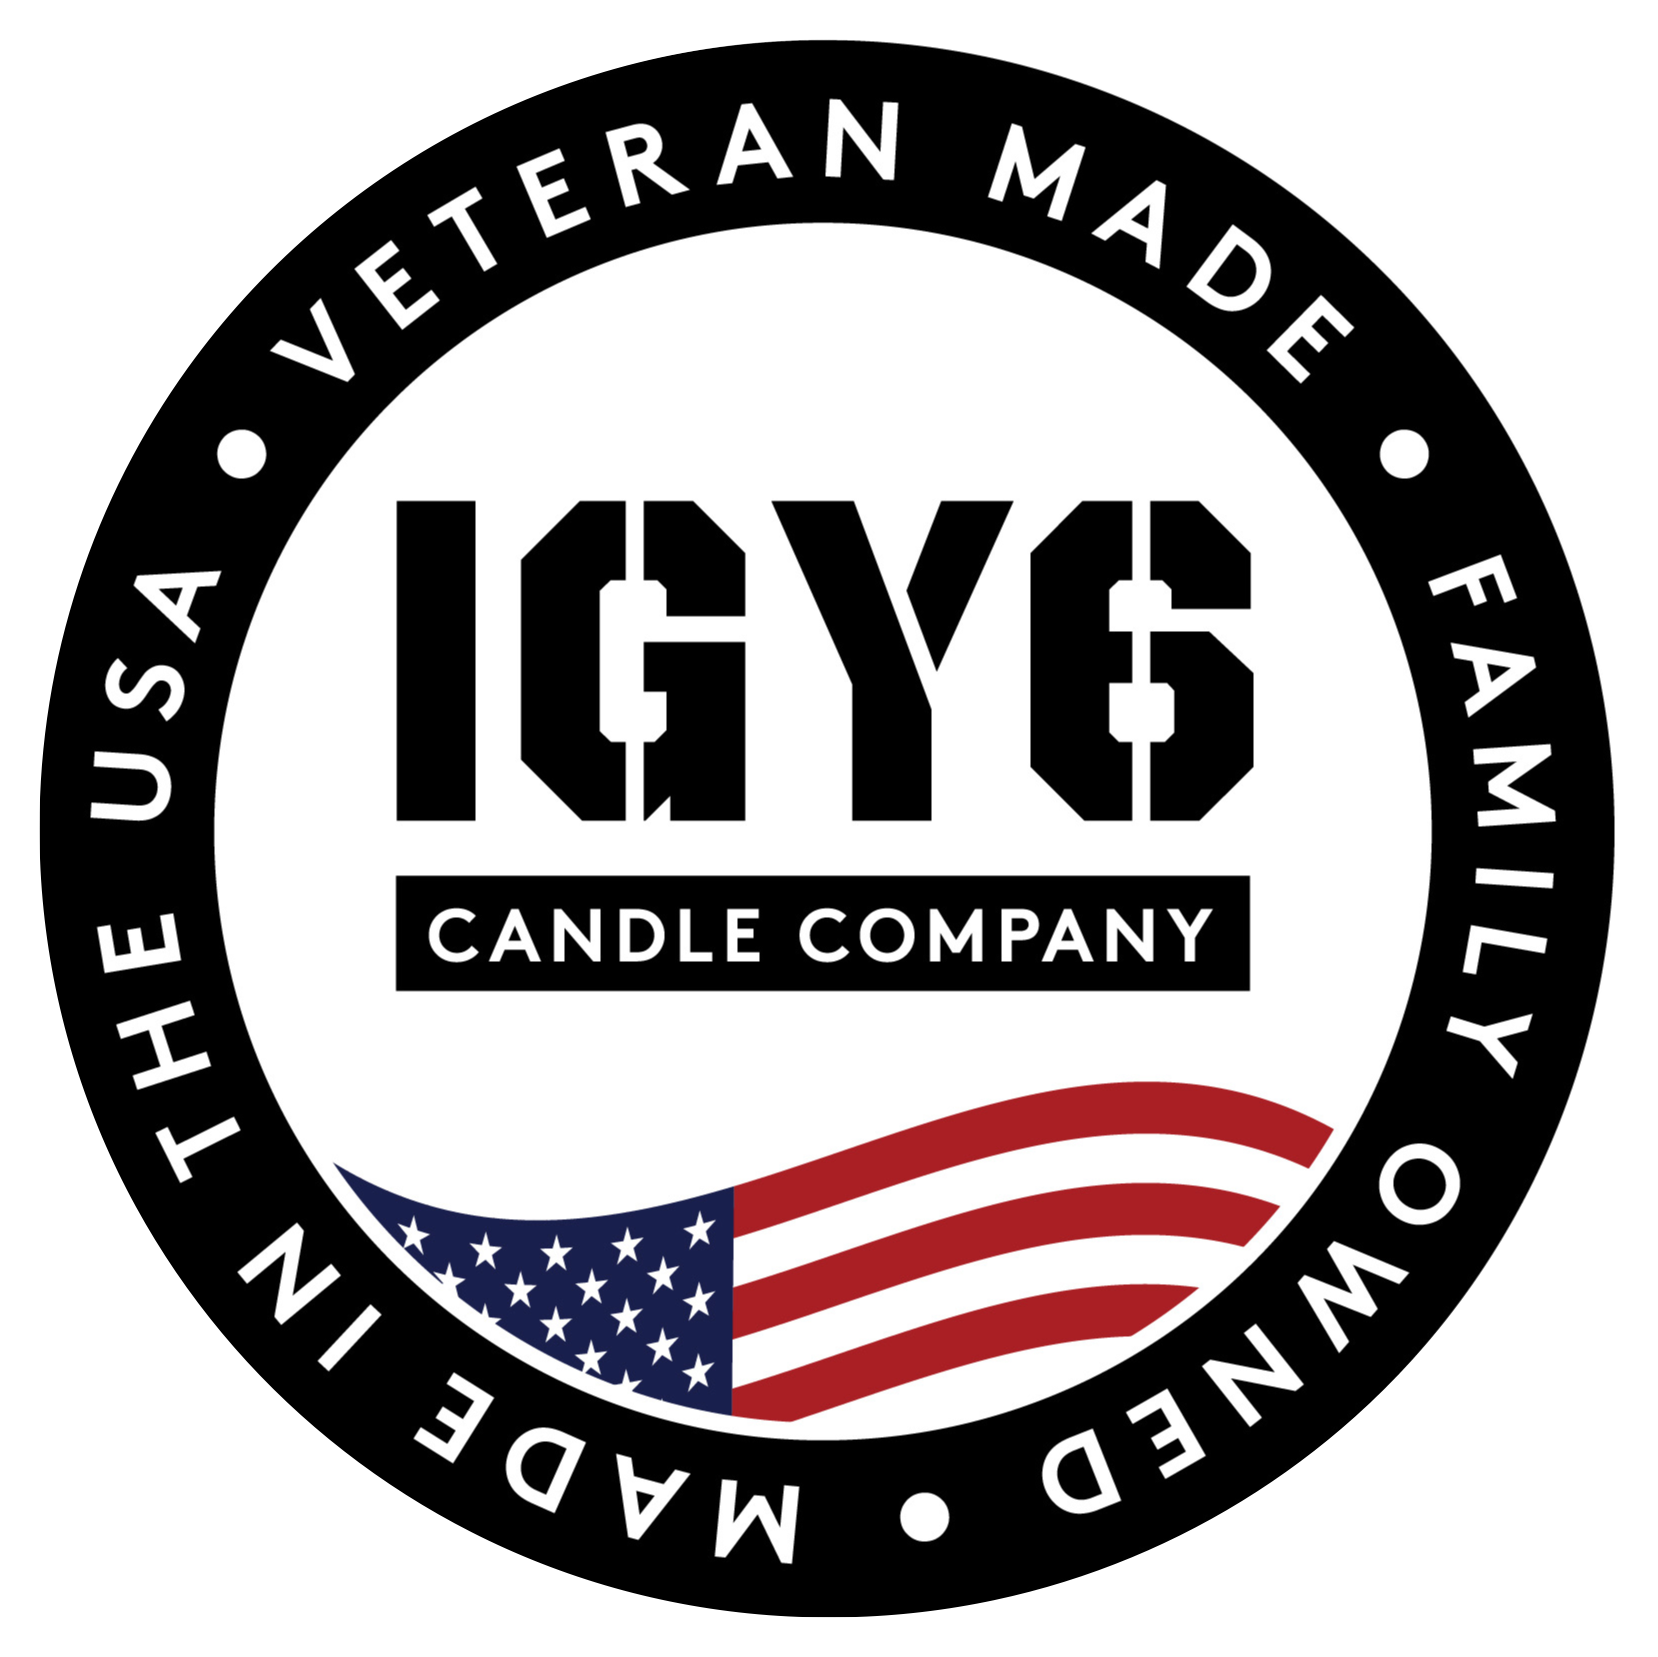 IGY6 Candle Company